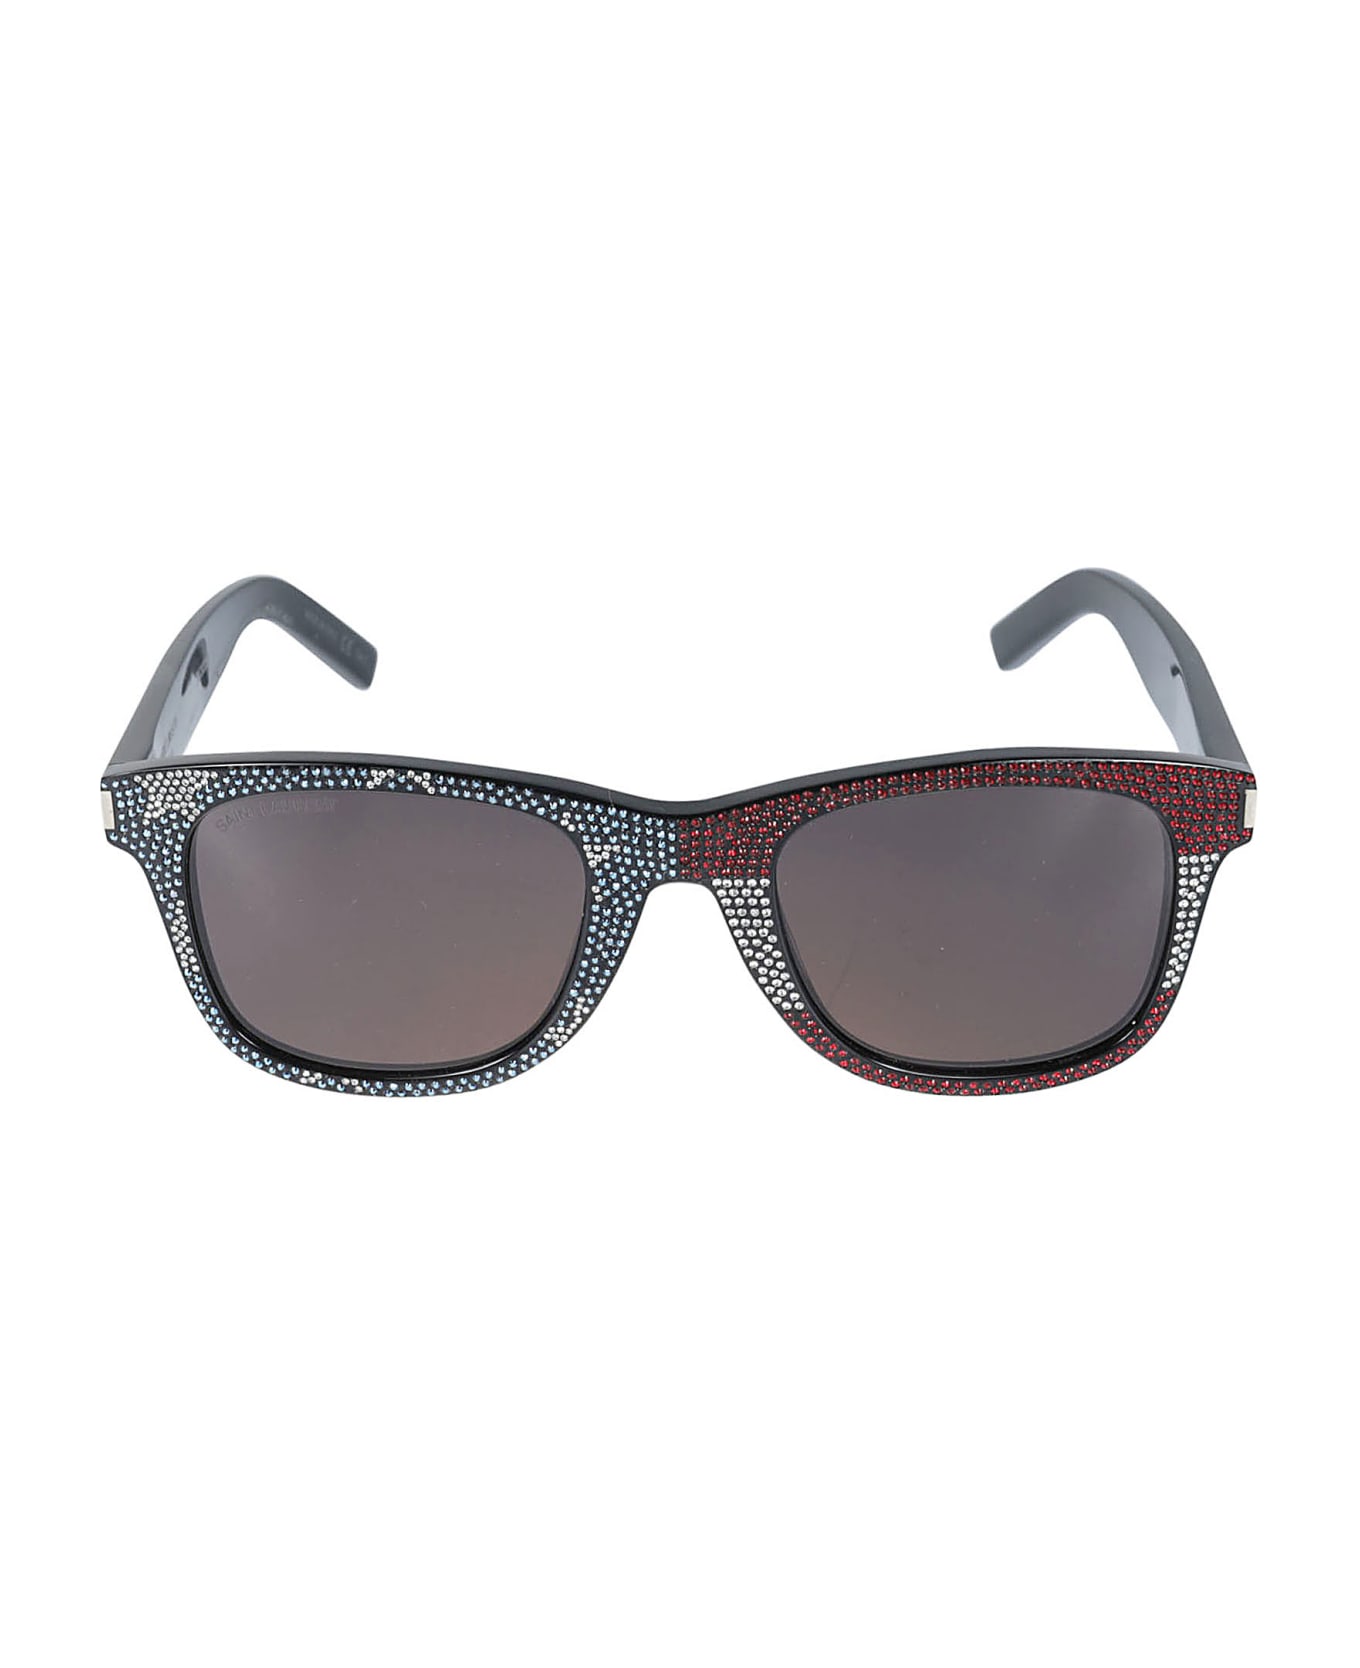 Saint Laurent Eyewear Square Frame Studded visor Sunglasses - Black/Grey